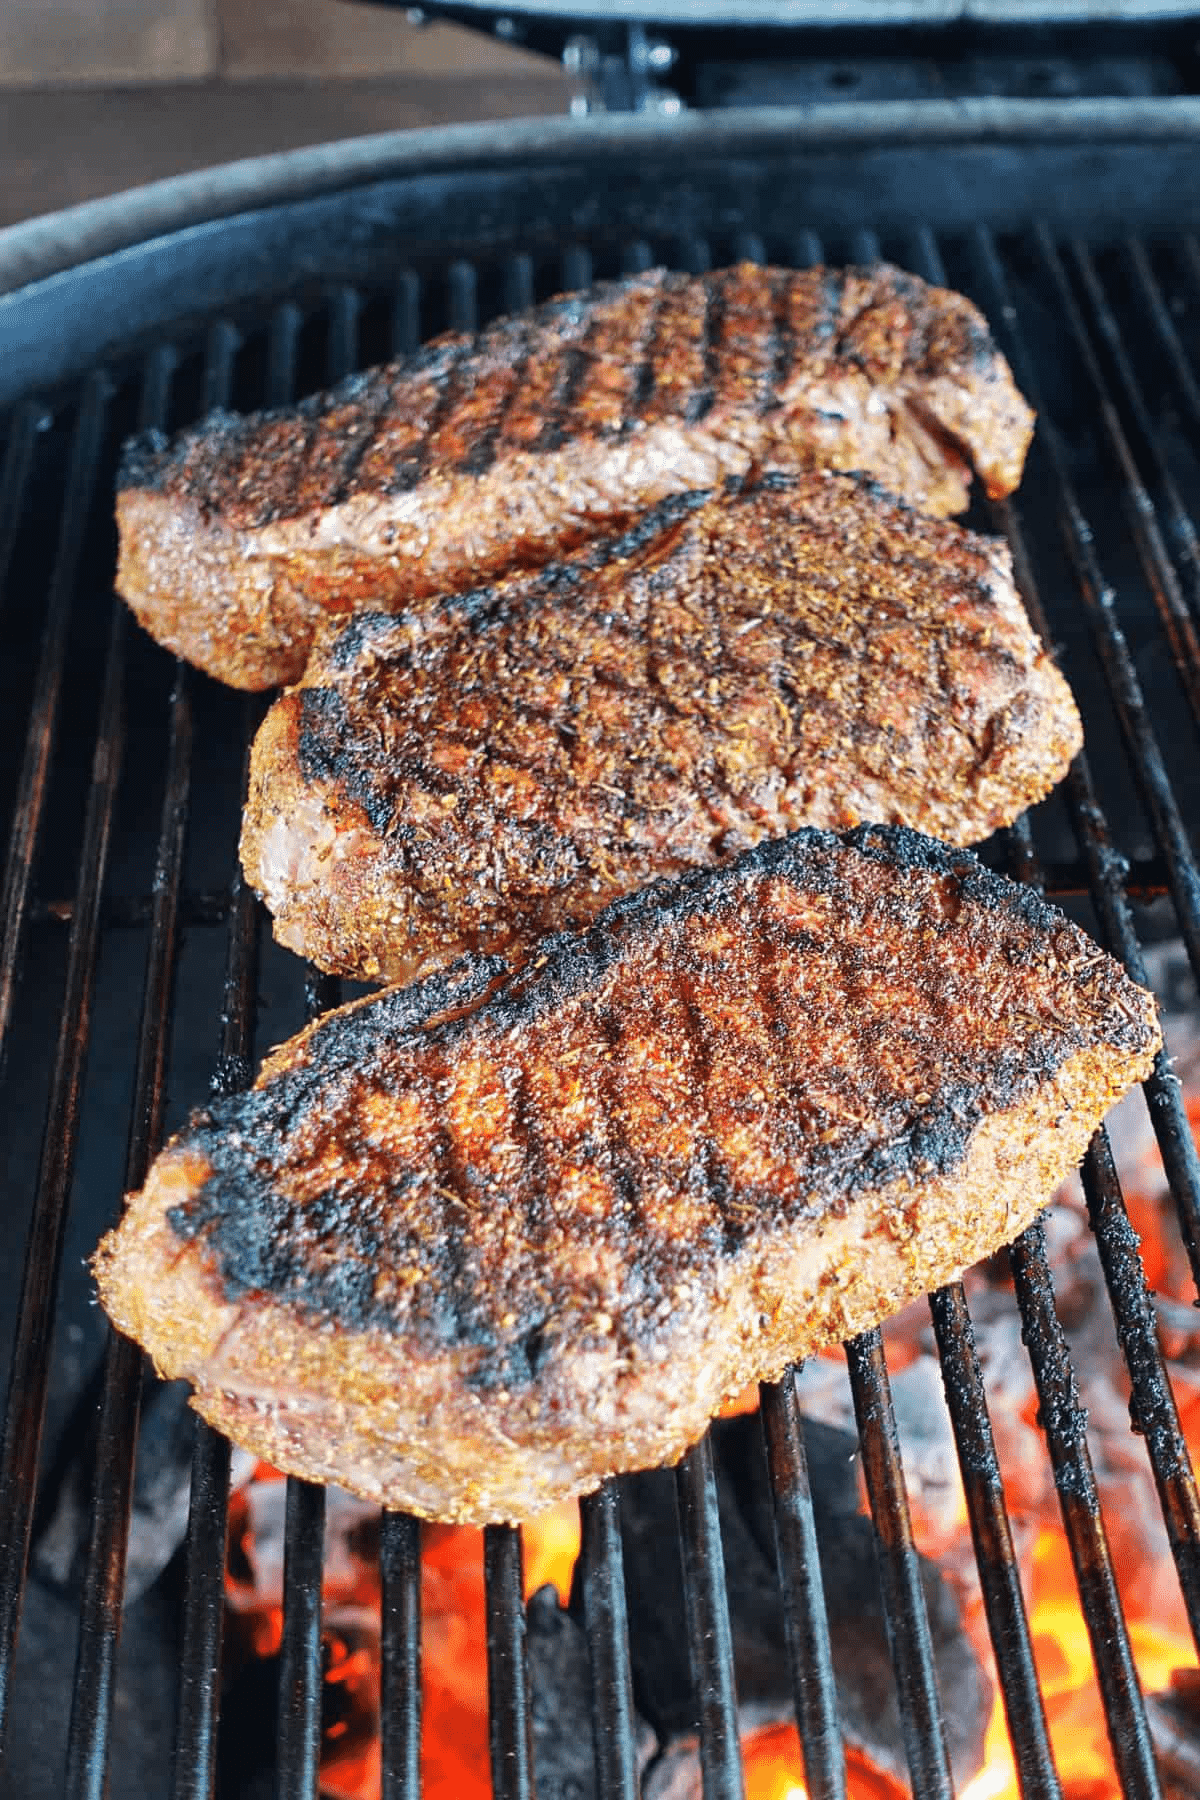 Steaks searing over high heat.